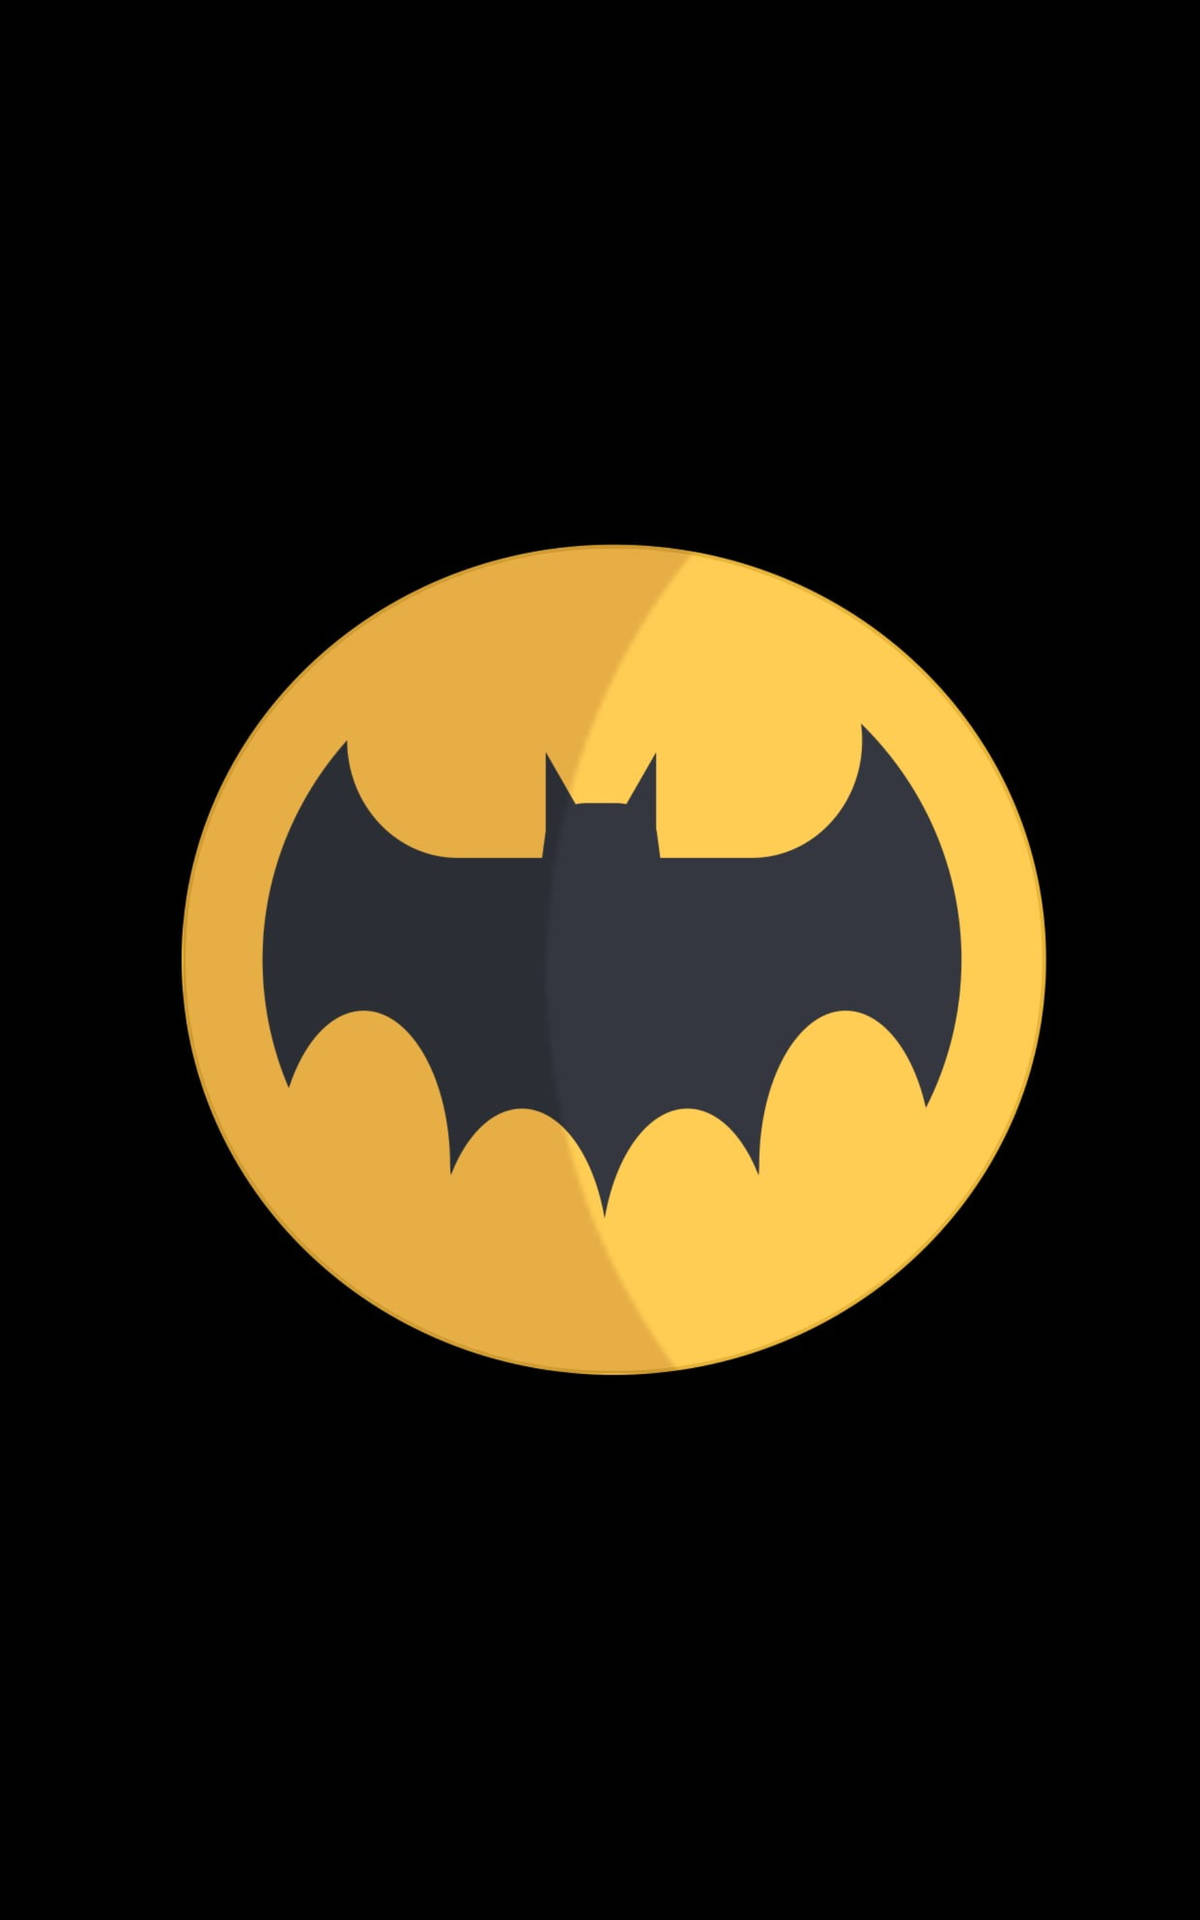 Classic Batman Logoon Black Background.jpg Background